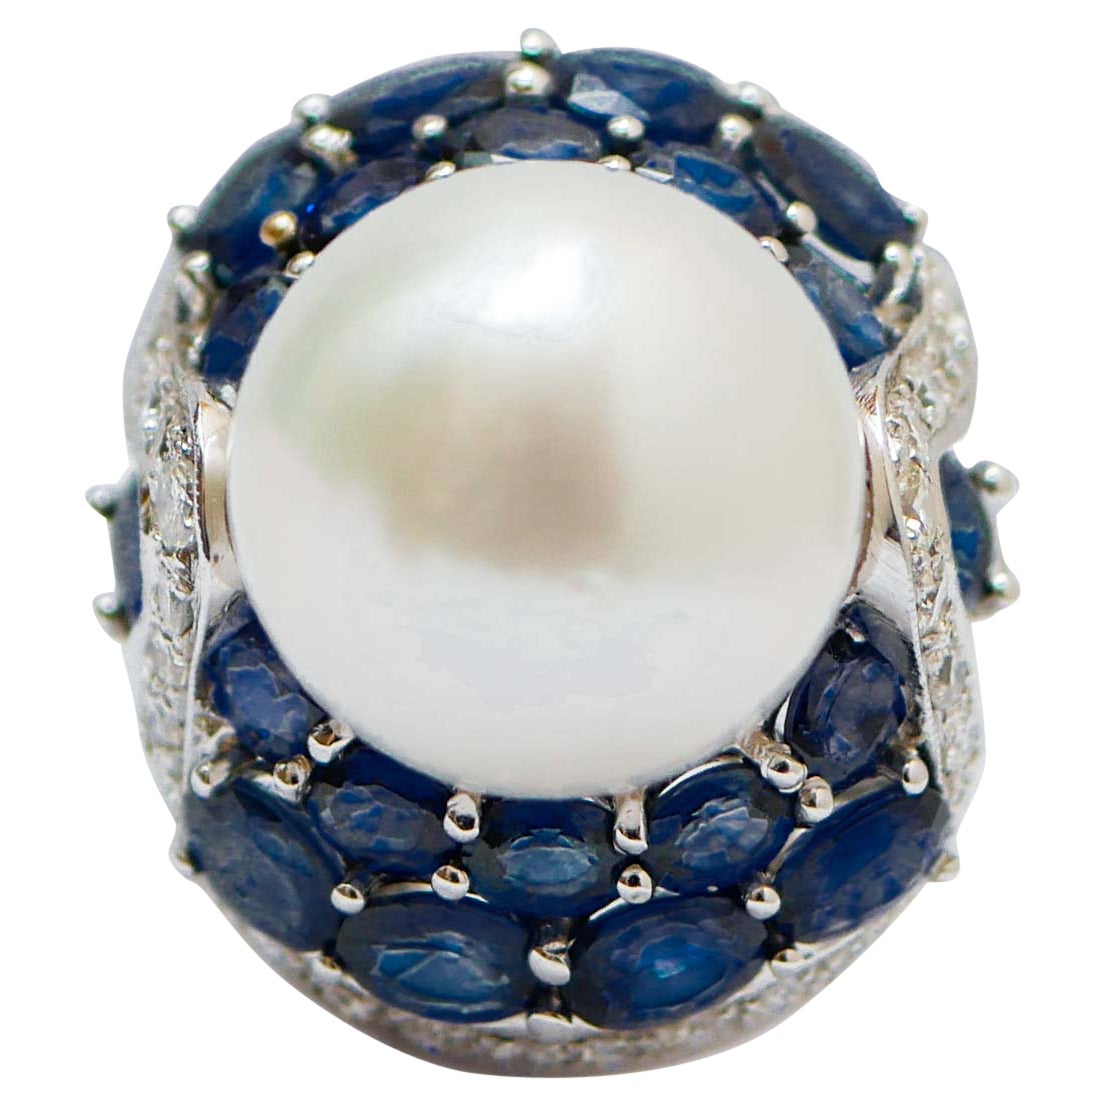 South-Sea Pearl, Sapphires, Diamonds, 14 Karat White Gold Ring.